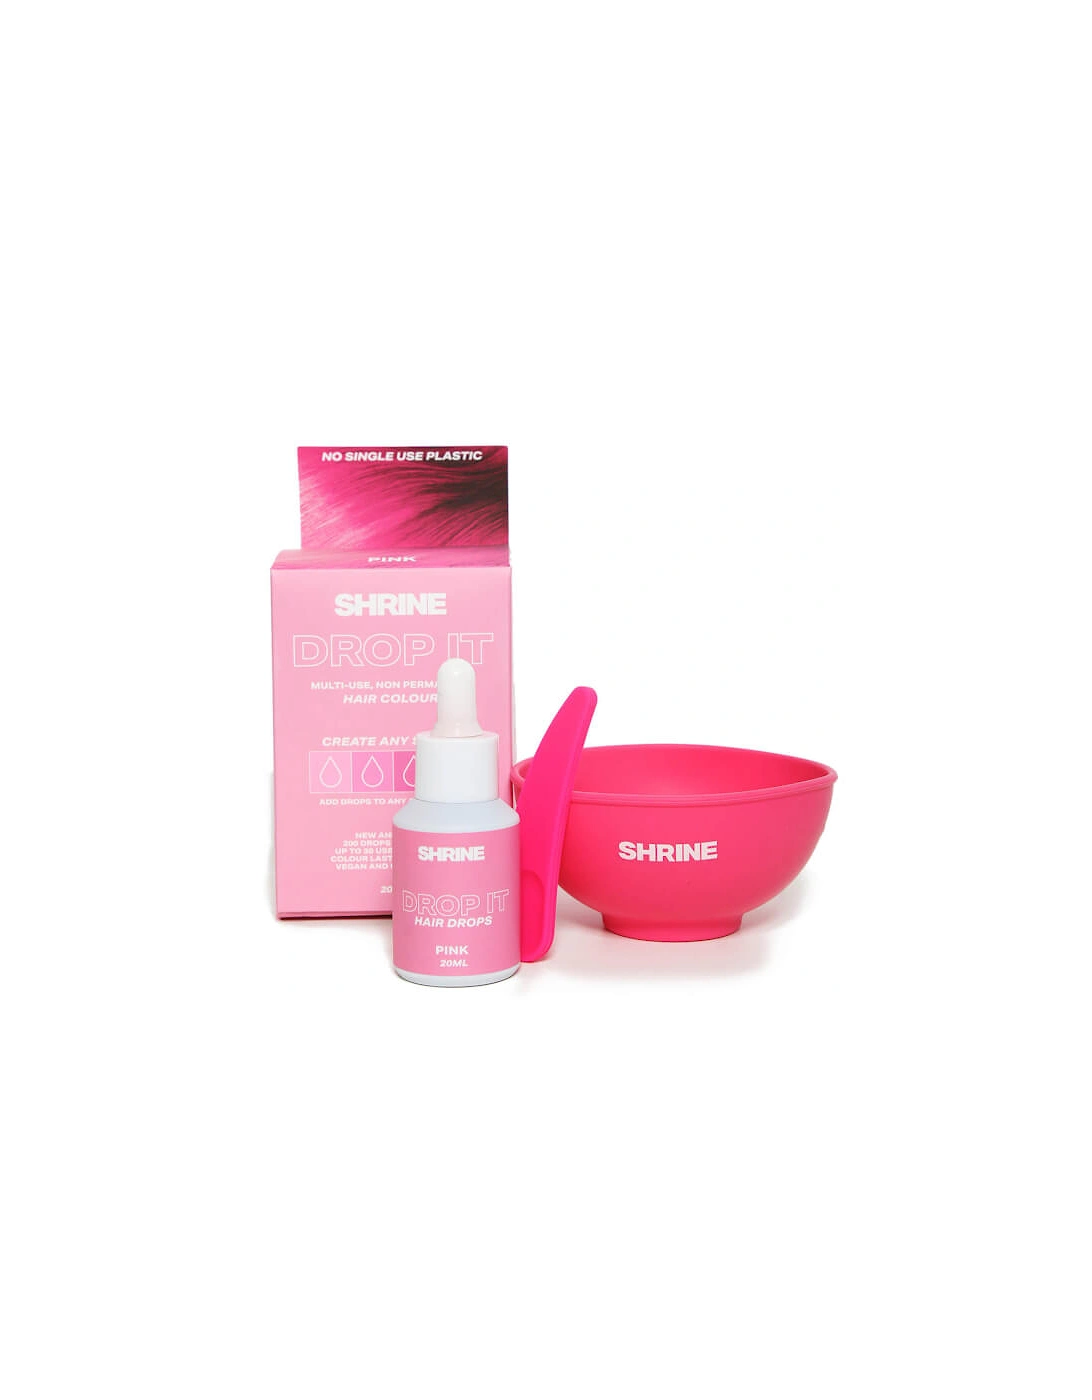 Drop It Hair Colourant - Pink 20ml - SHRINE, 2 of 1